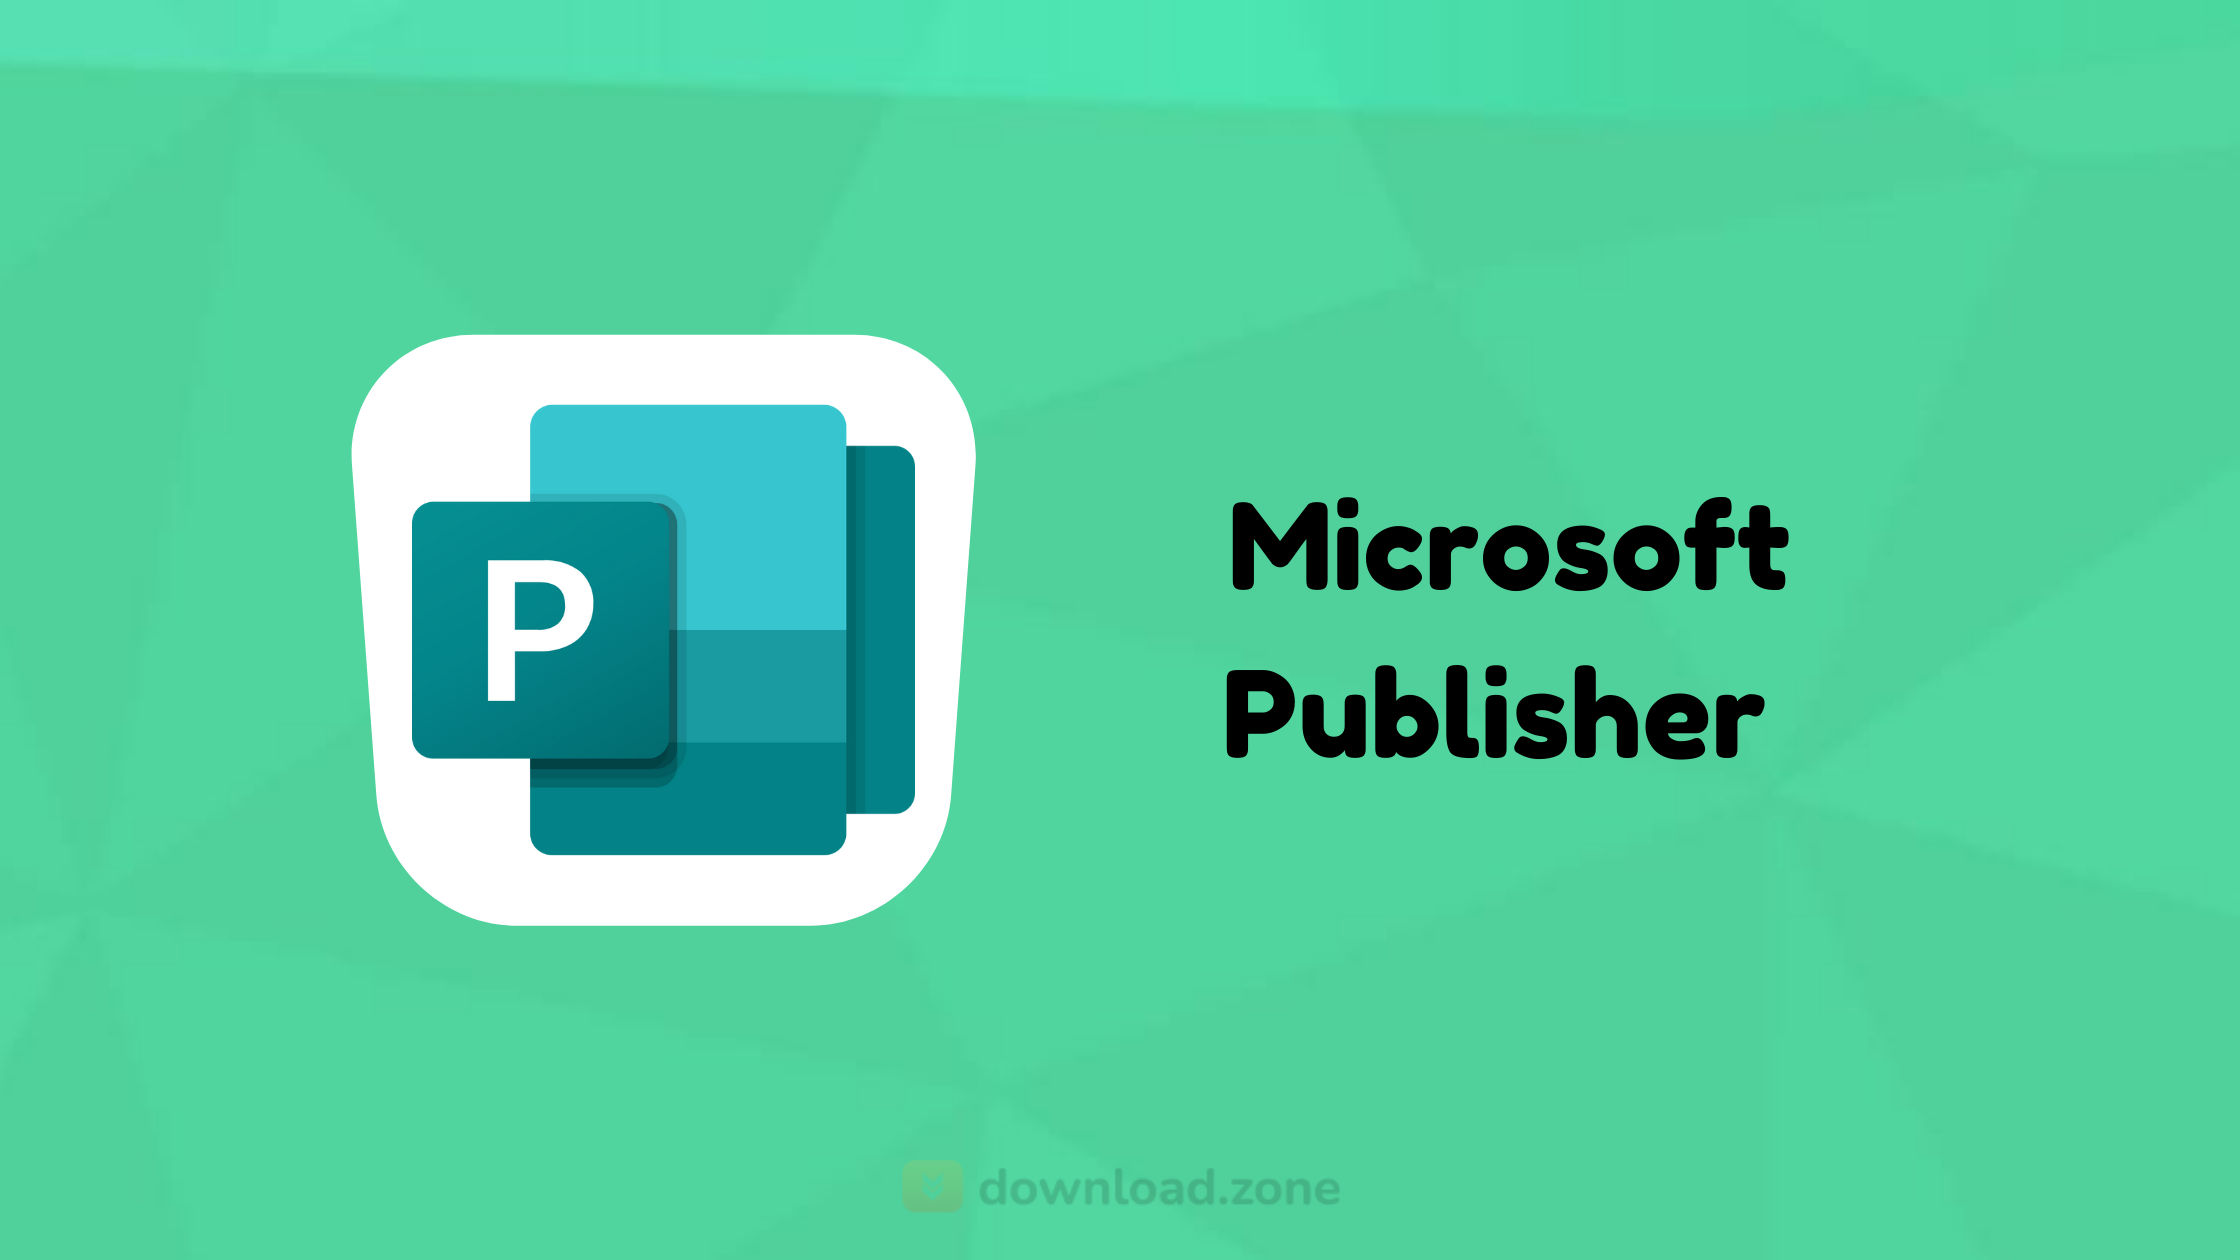 download-microsoft-publisher-for-desktop-publisher-to-create-publication